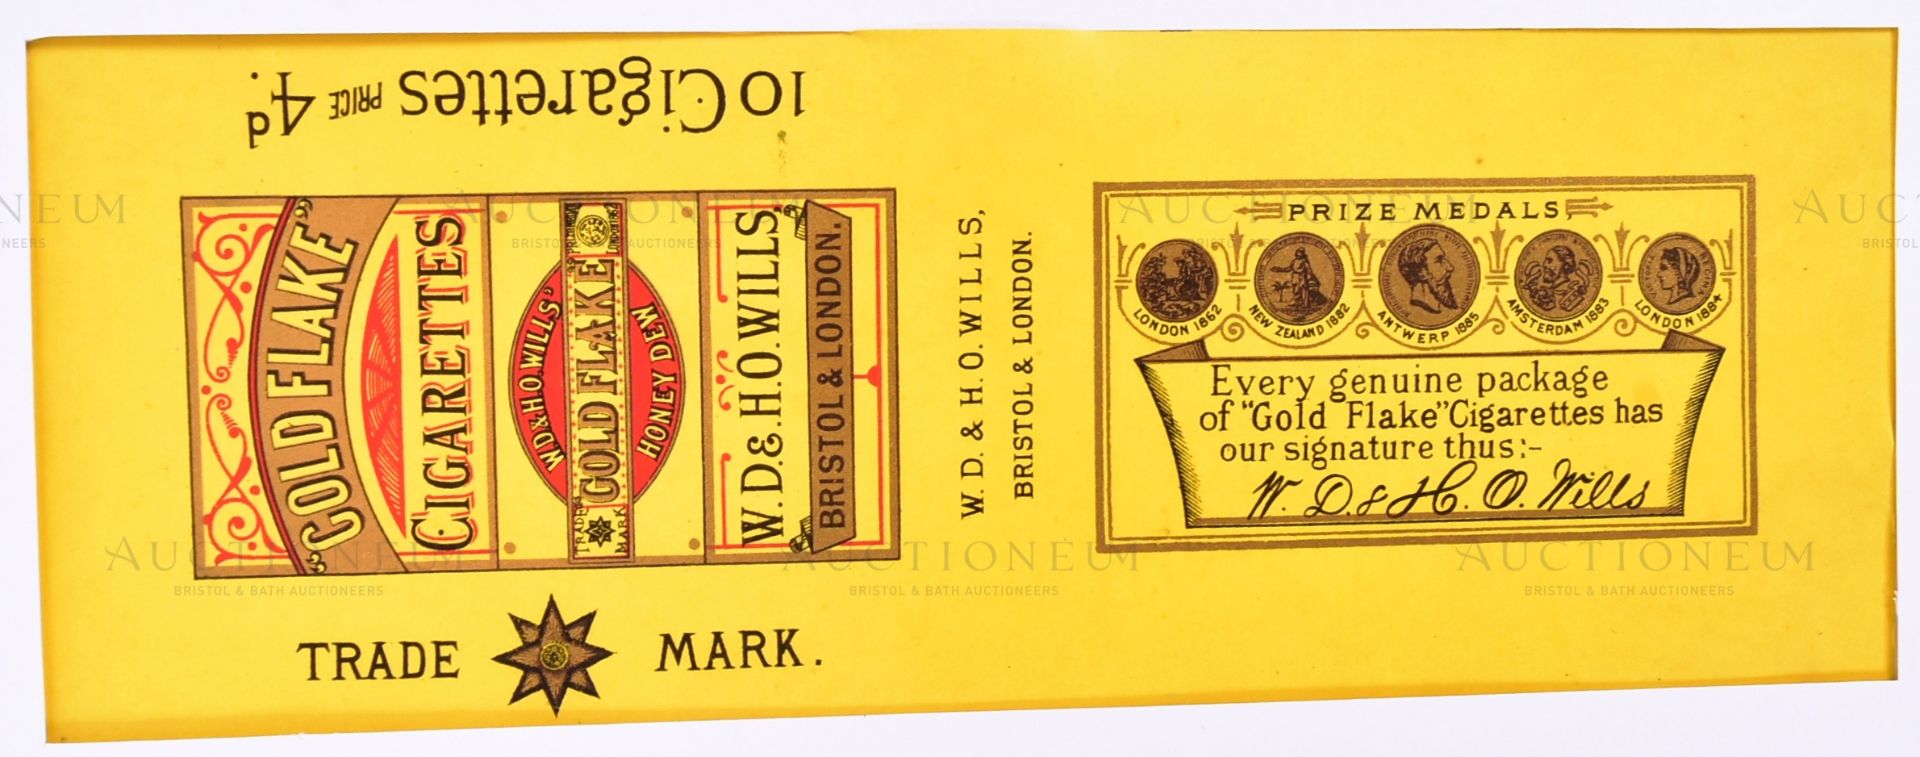 MARDON, SON & HALL - 20TH CENTURY TOBACCO PACKET / LABEL DESIGNS - Image 4 of 7